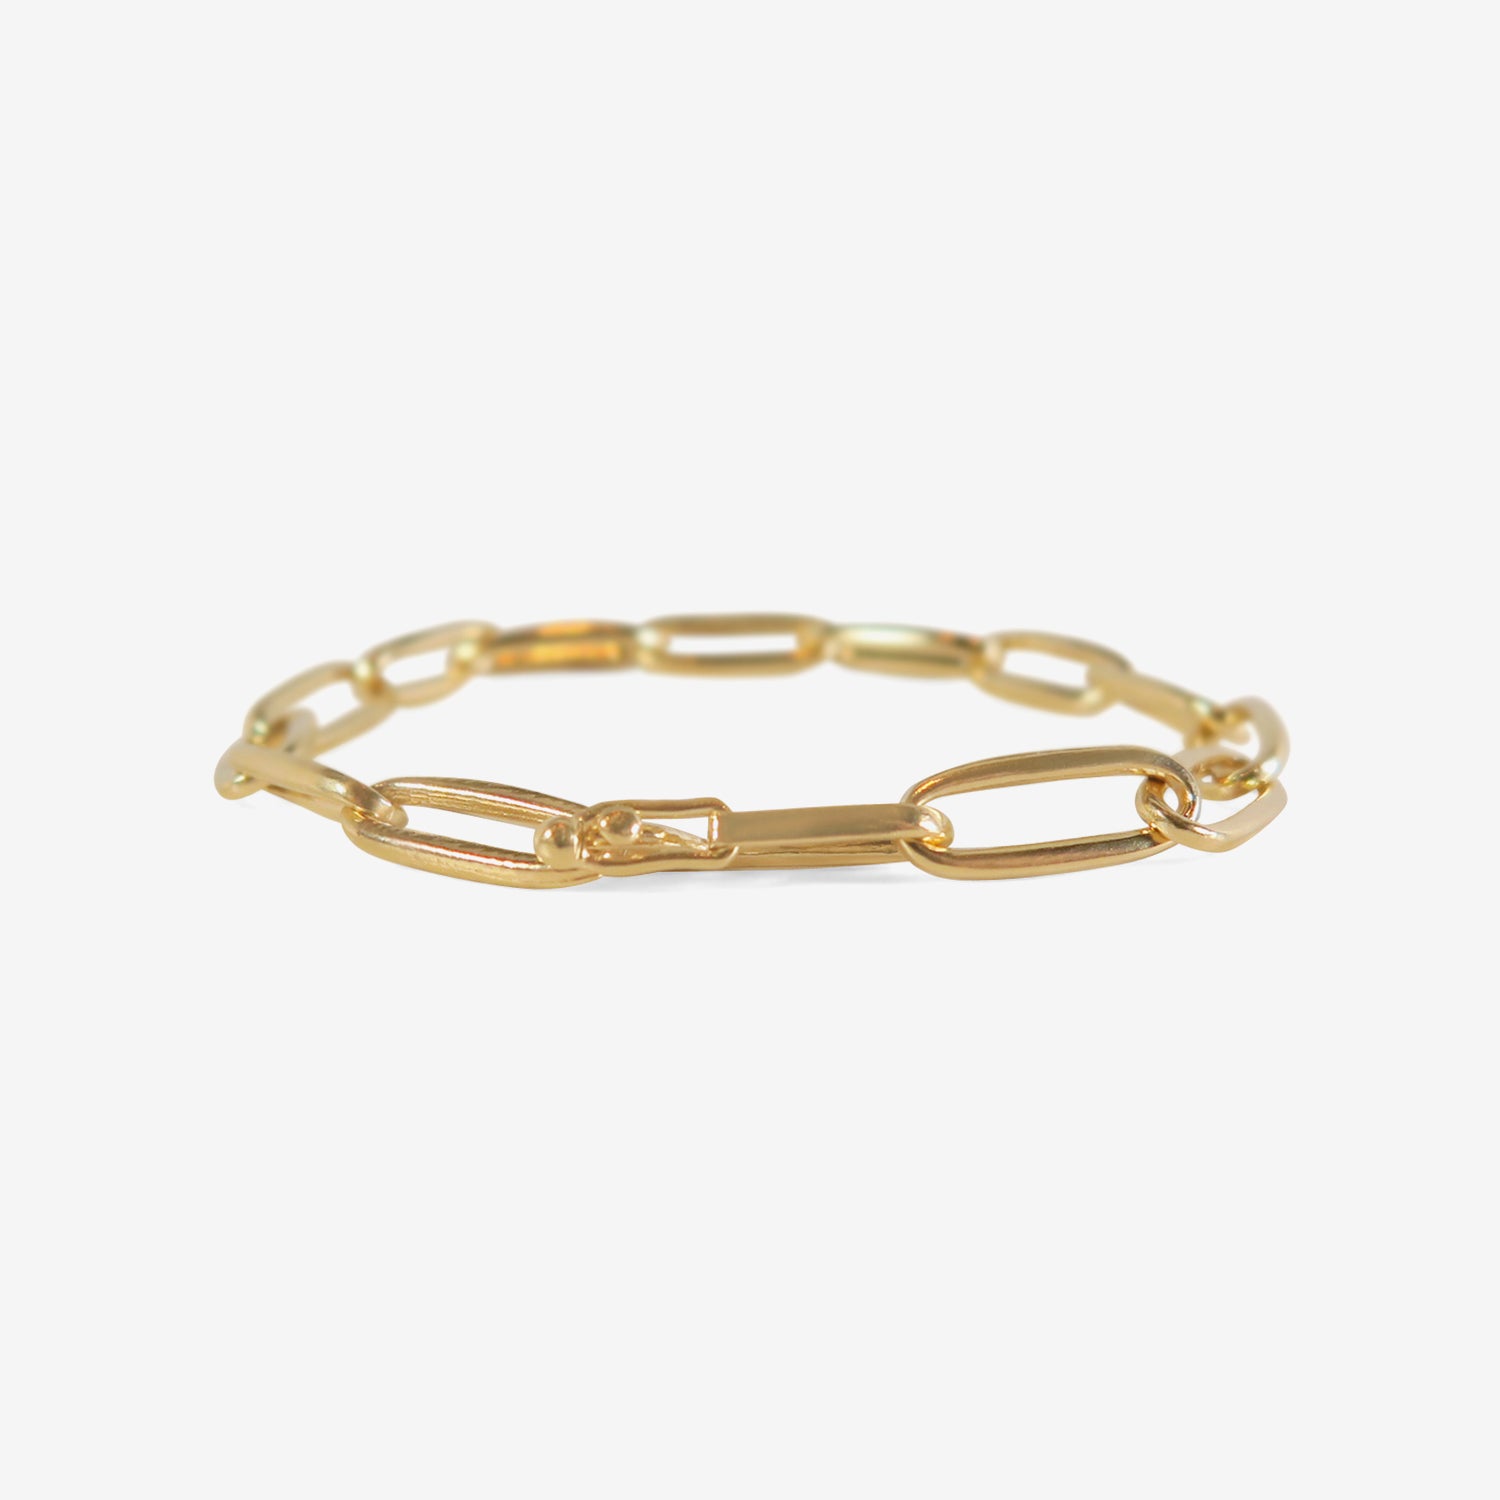 Nicole LANDAW 14K Yellow Gold Solid Link Chain Bracelet